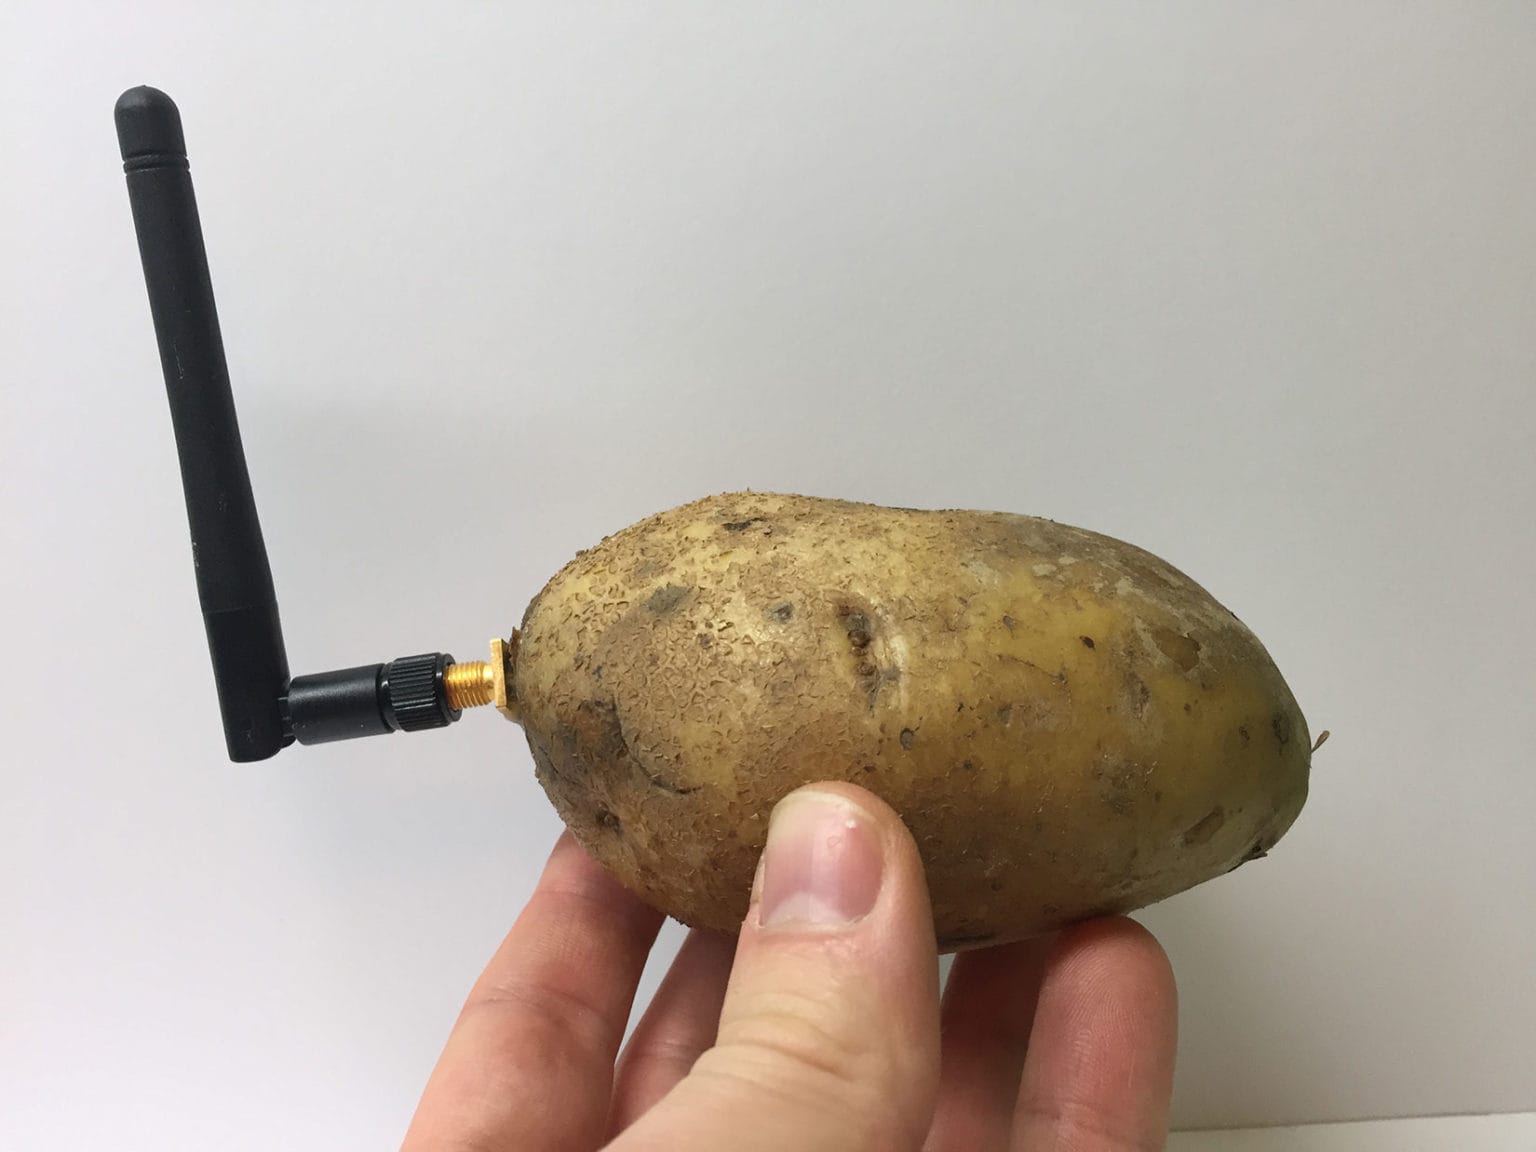 Smart Potato gag at CES 2020